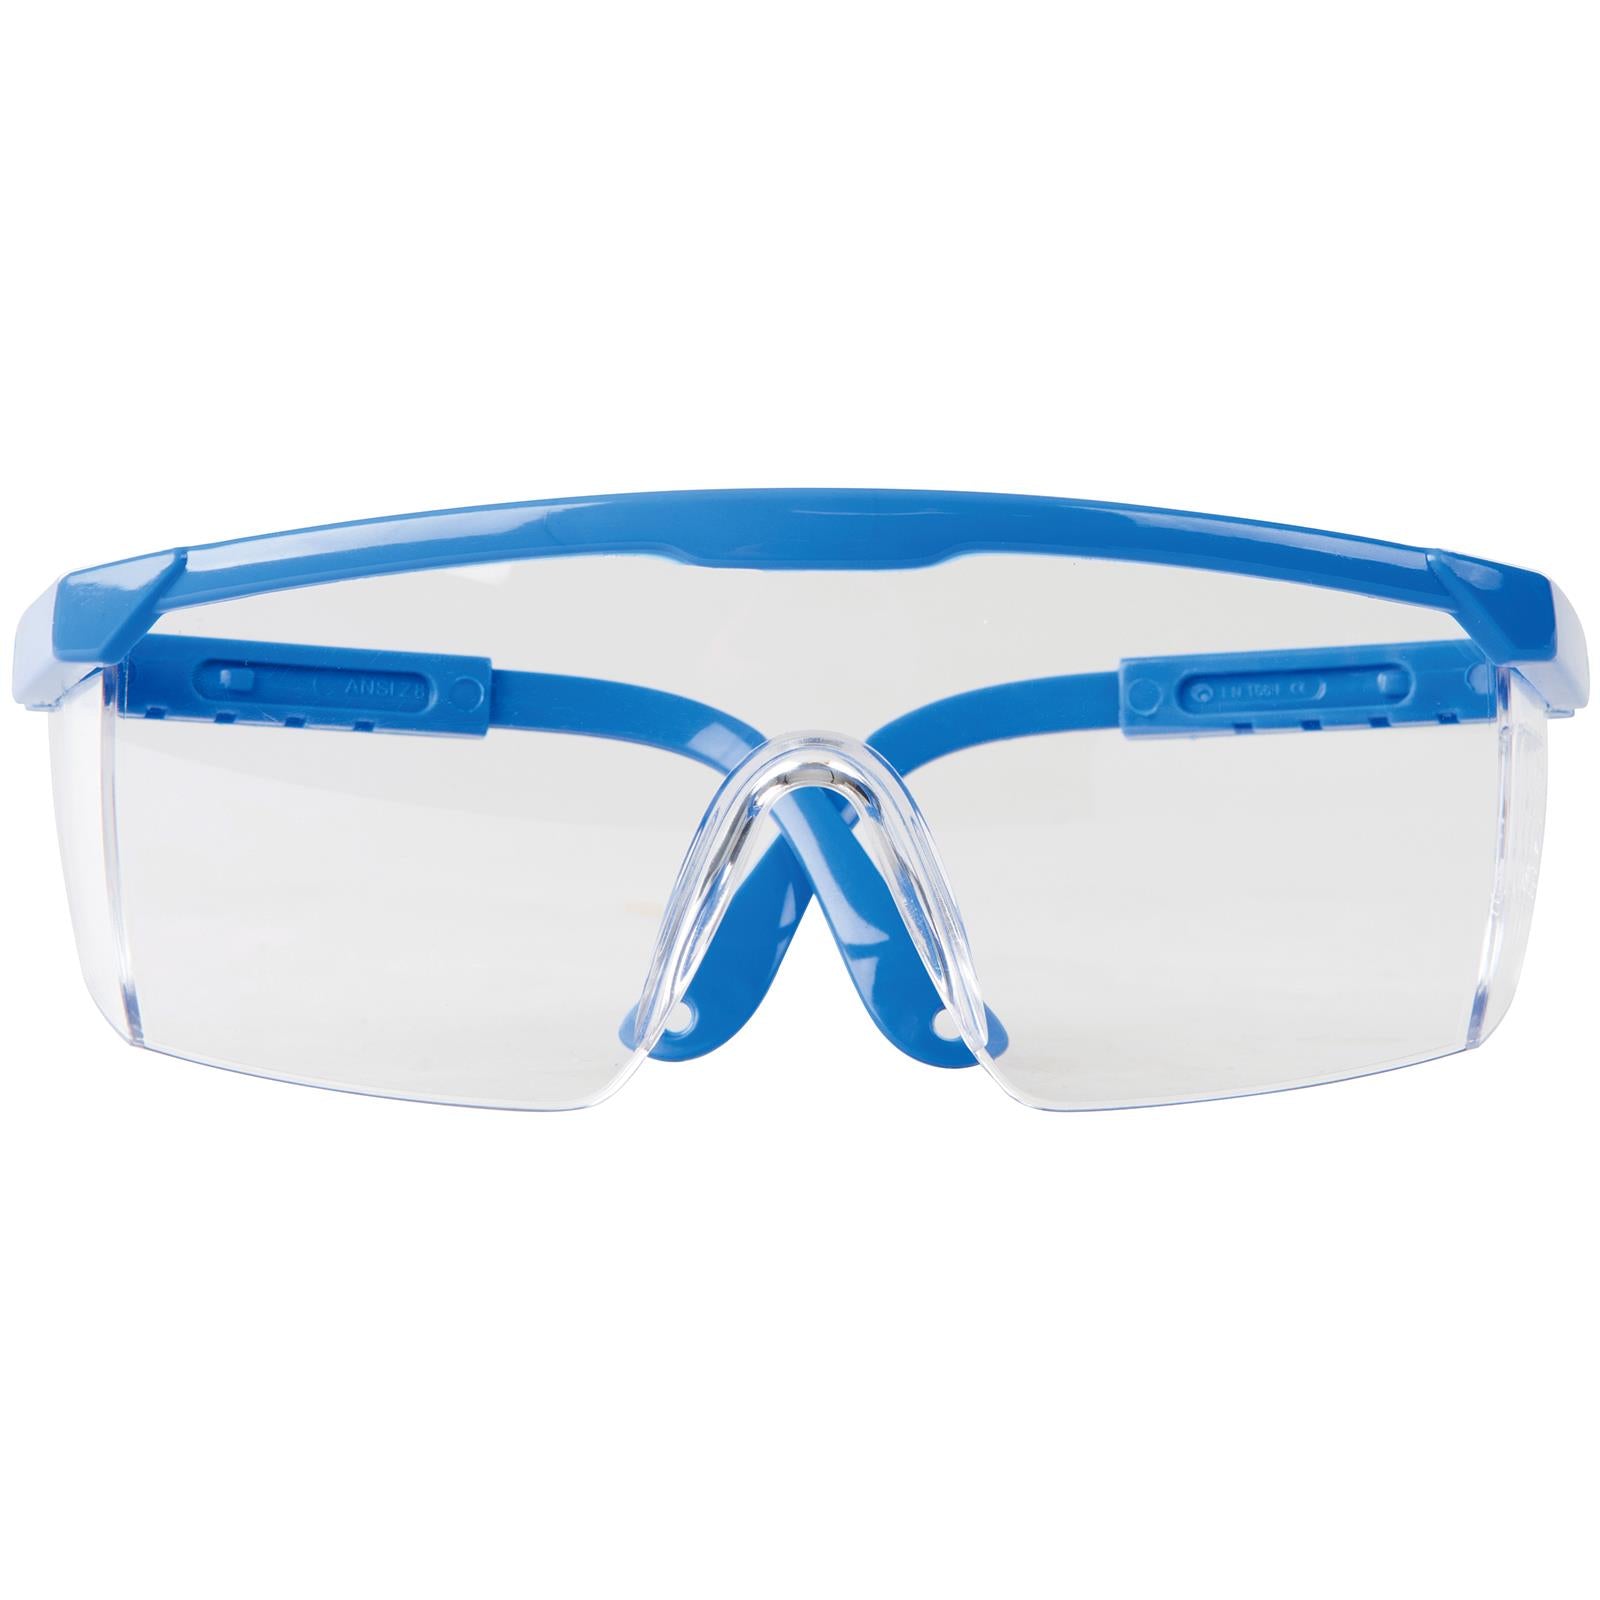 Silverline Clear Safety Glasses Goggles Eye Protection Eyewear Wraparound